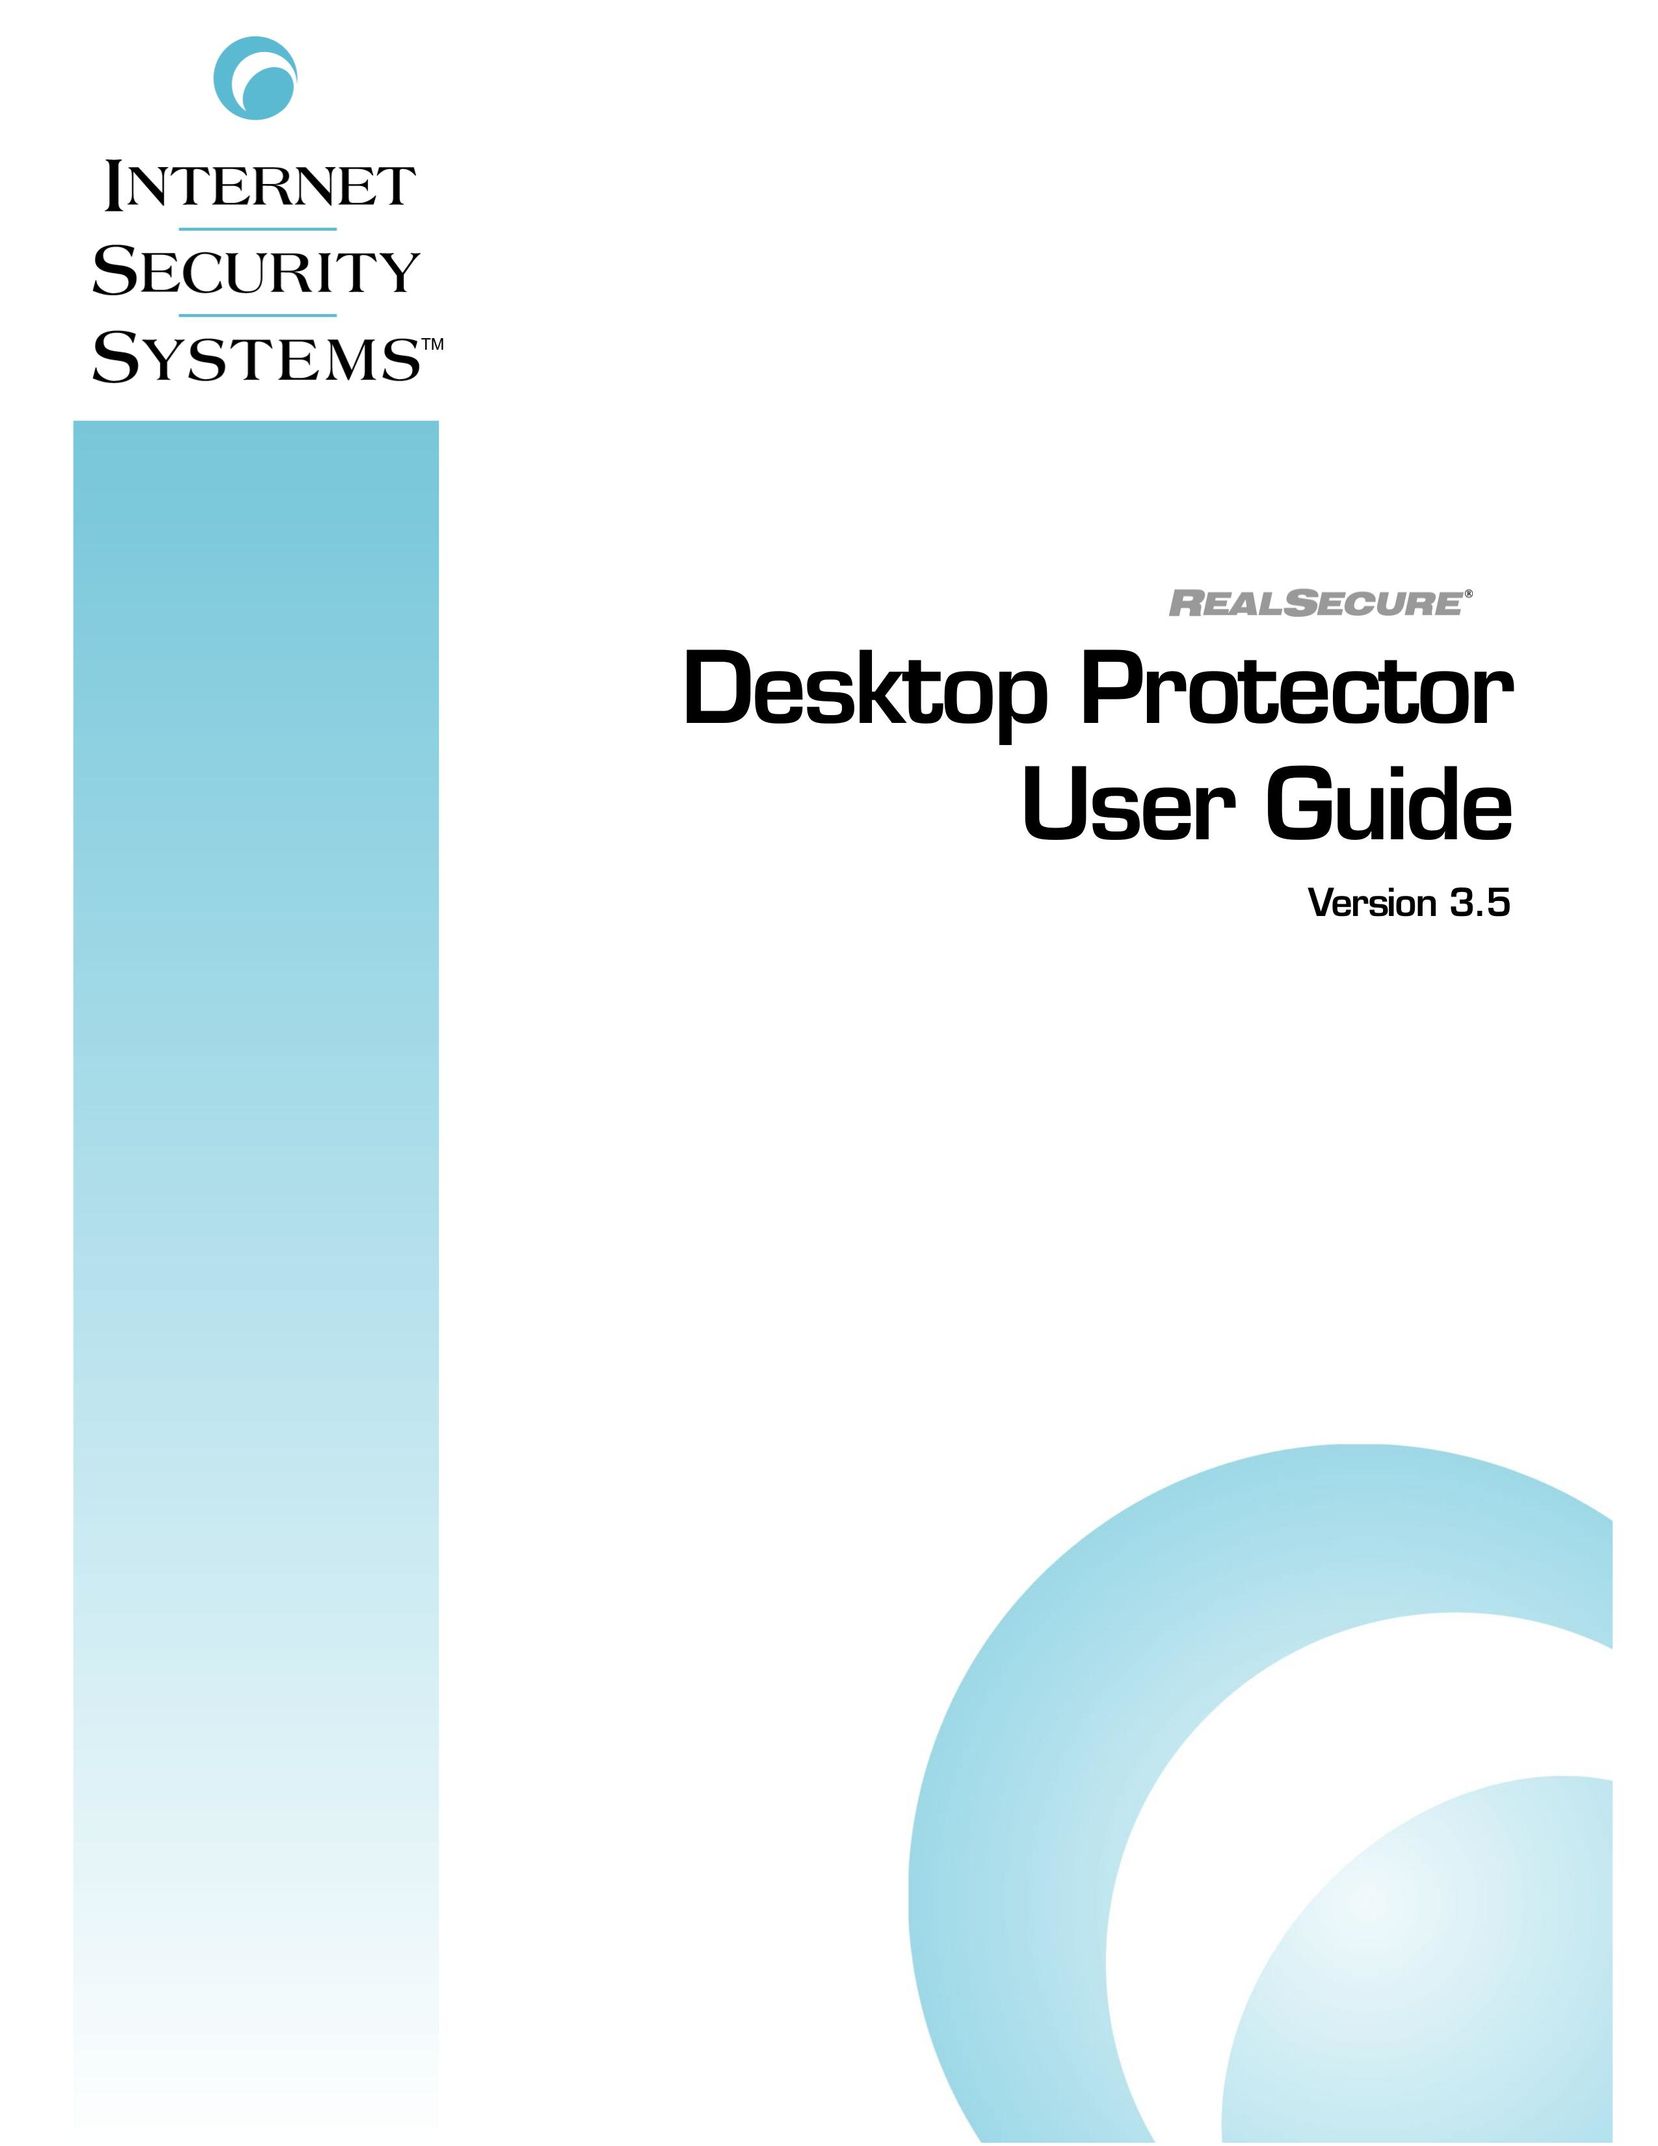 Internet Security Systems Desktop Protector Computer Hardware User Manual